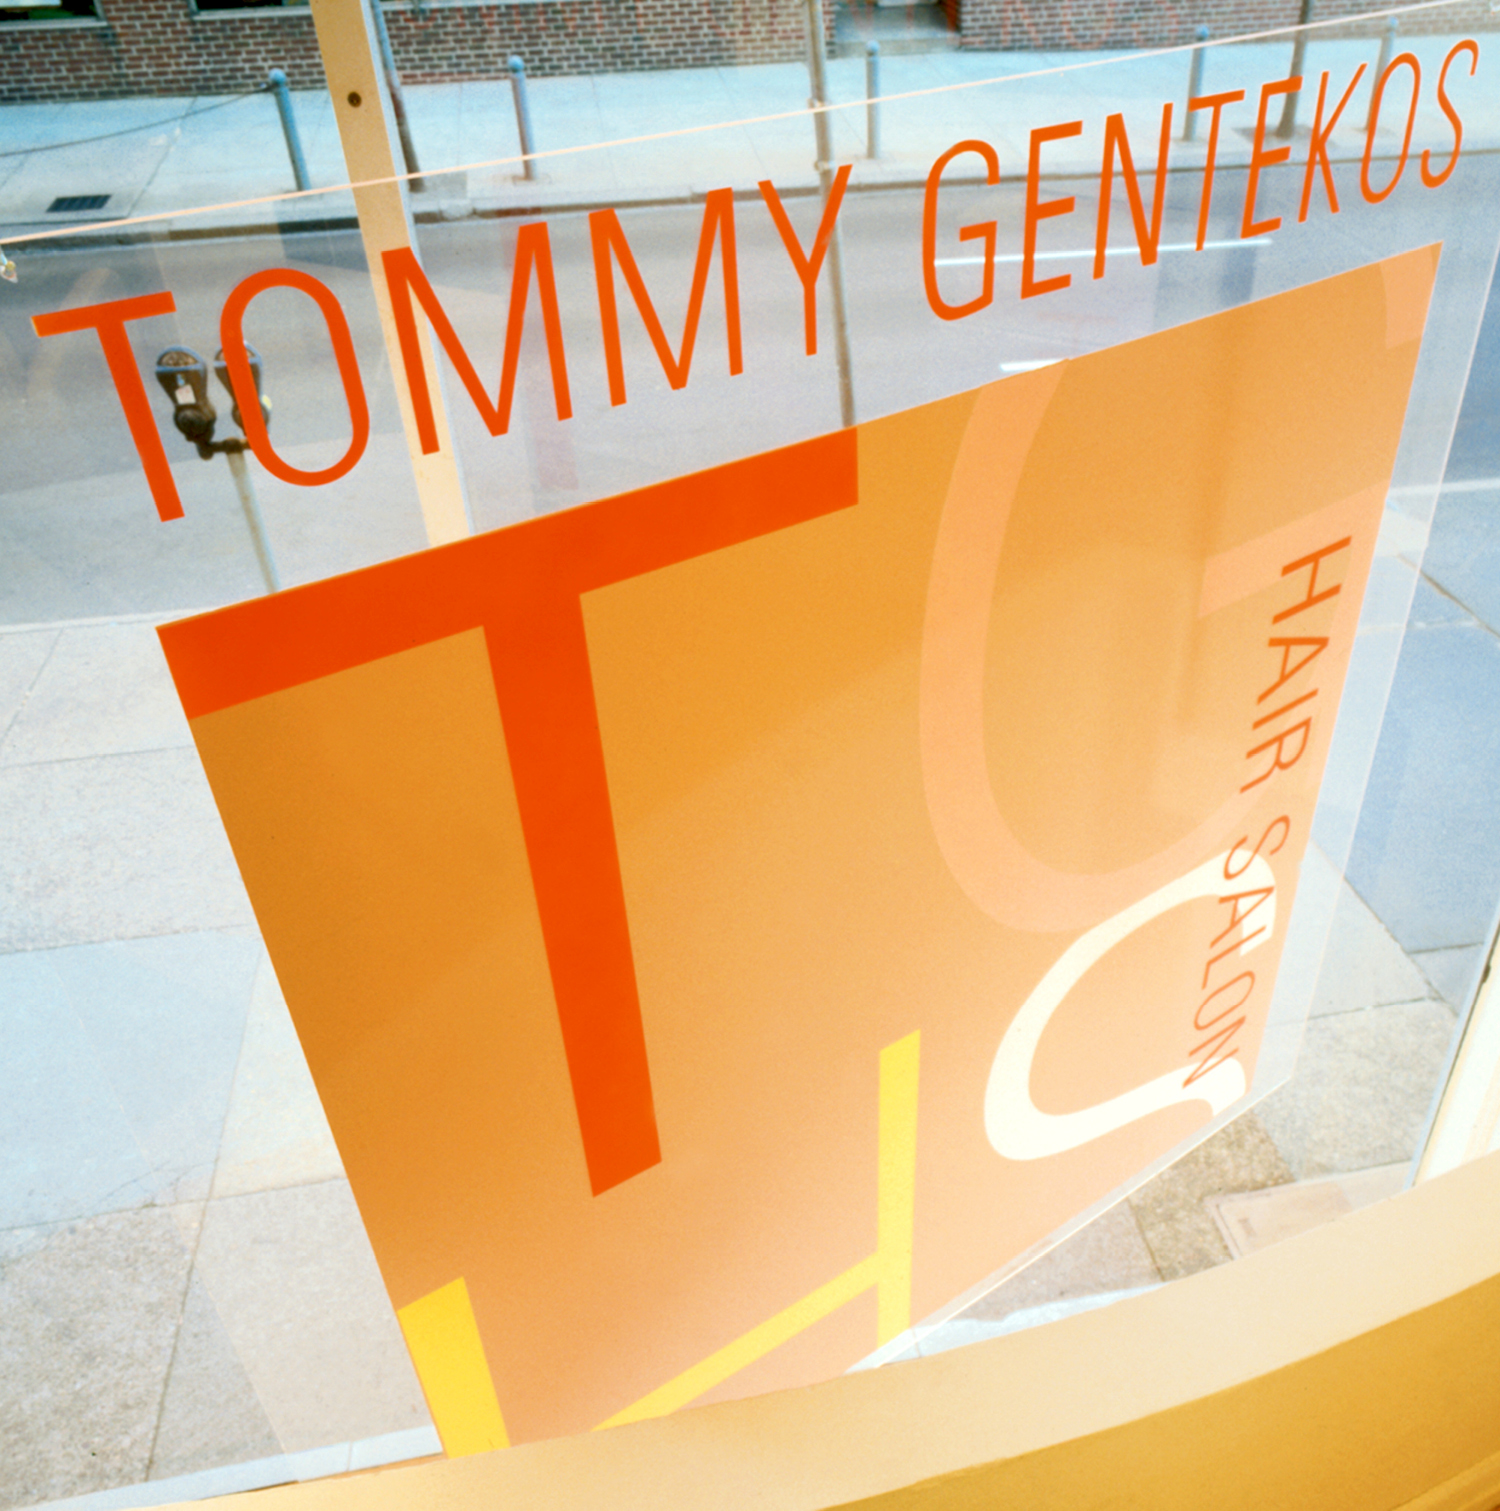 Tommy Gentekos Hair Salon